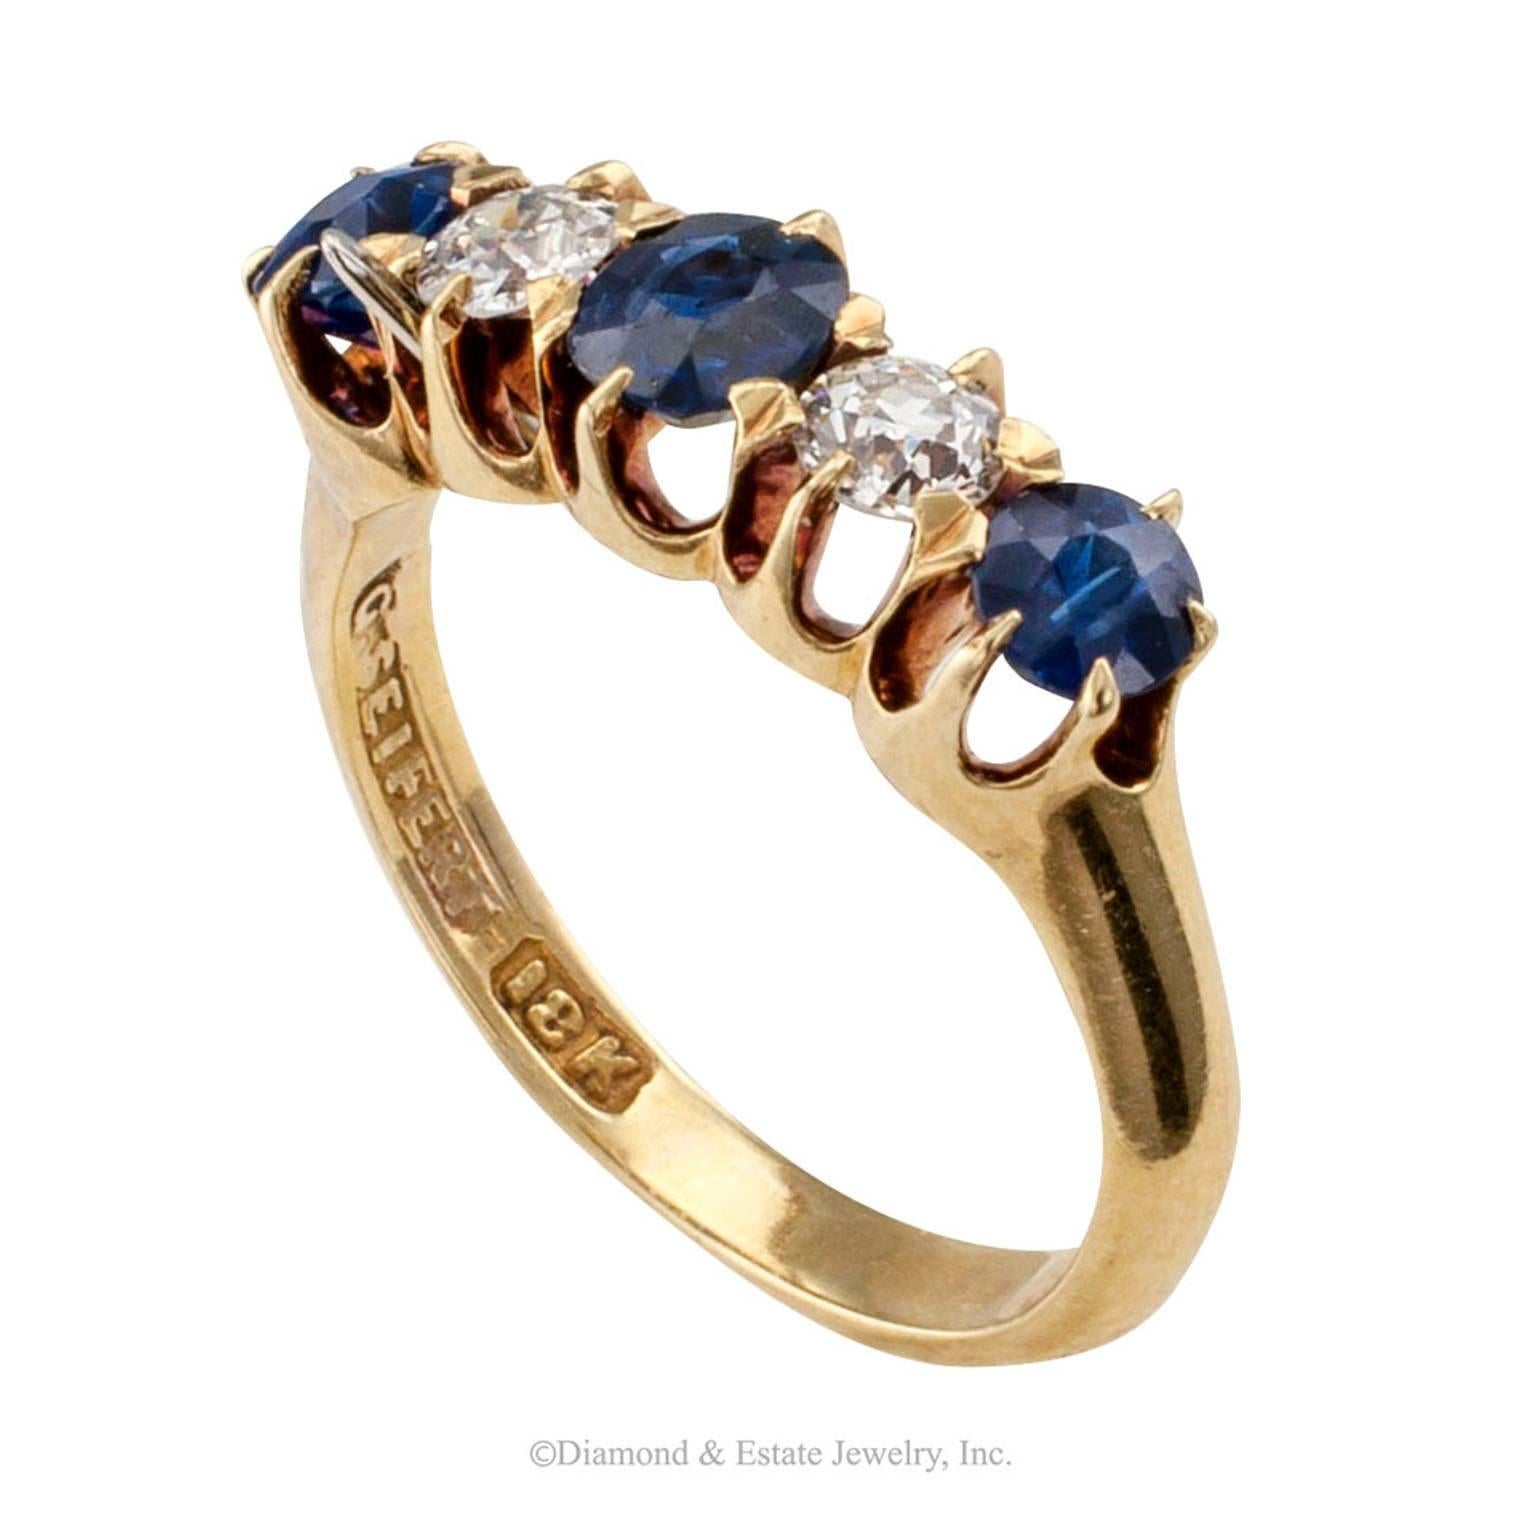 G. Seifert Victorian Diamond Sapphire Five-stone Gold Ring Band

G. Seifert Victorian sapphire and diamond five-stone 18-karat gold ring band, circa 1890s.  Featuring a pair of old European-cut diamonds totaling approximately 0.25 carat,